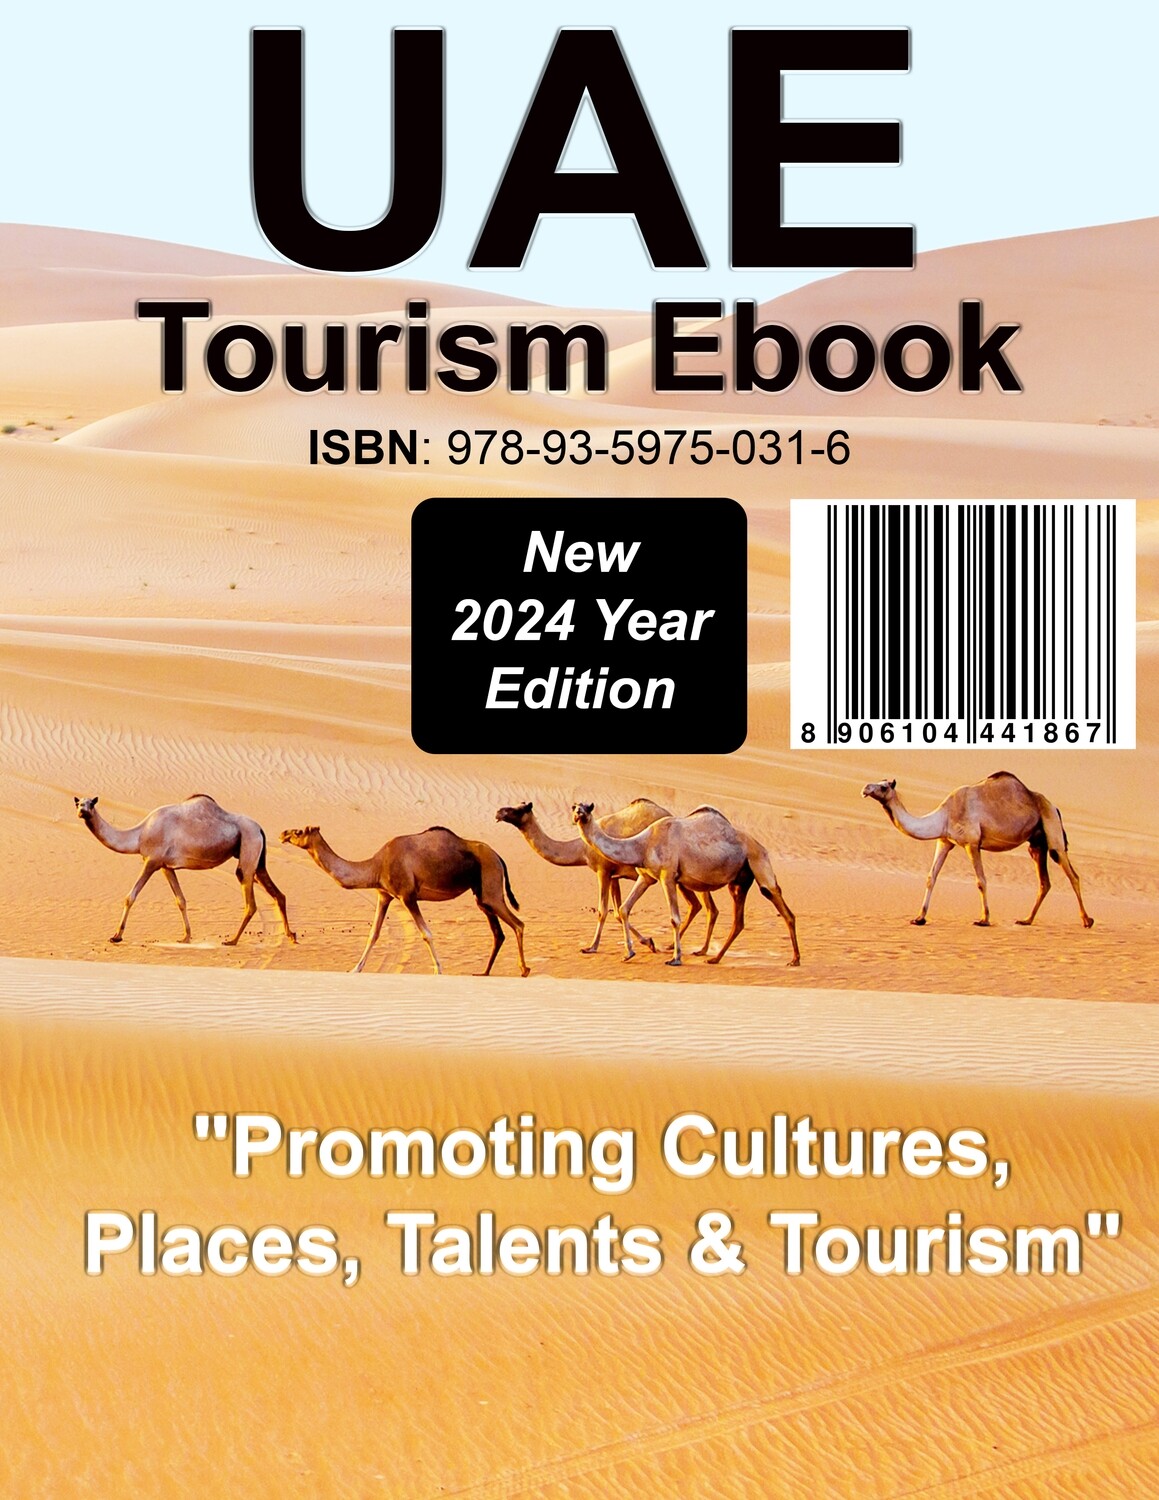 UAE Tourism eBook